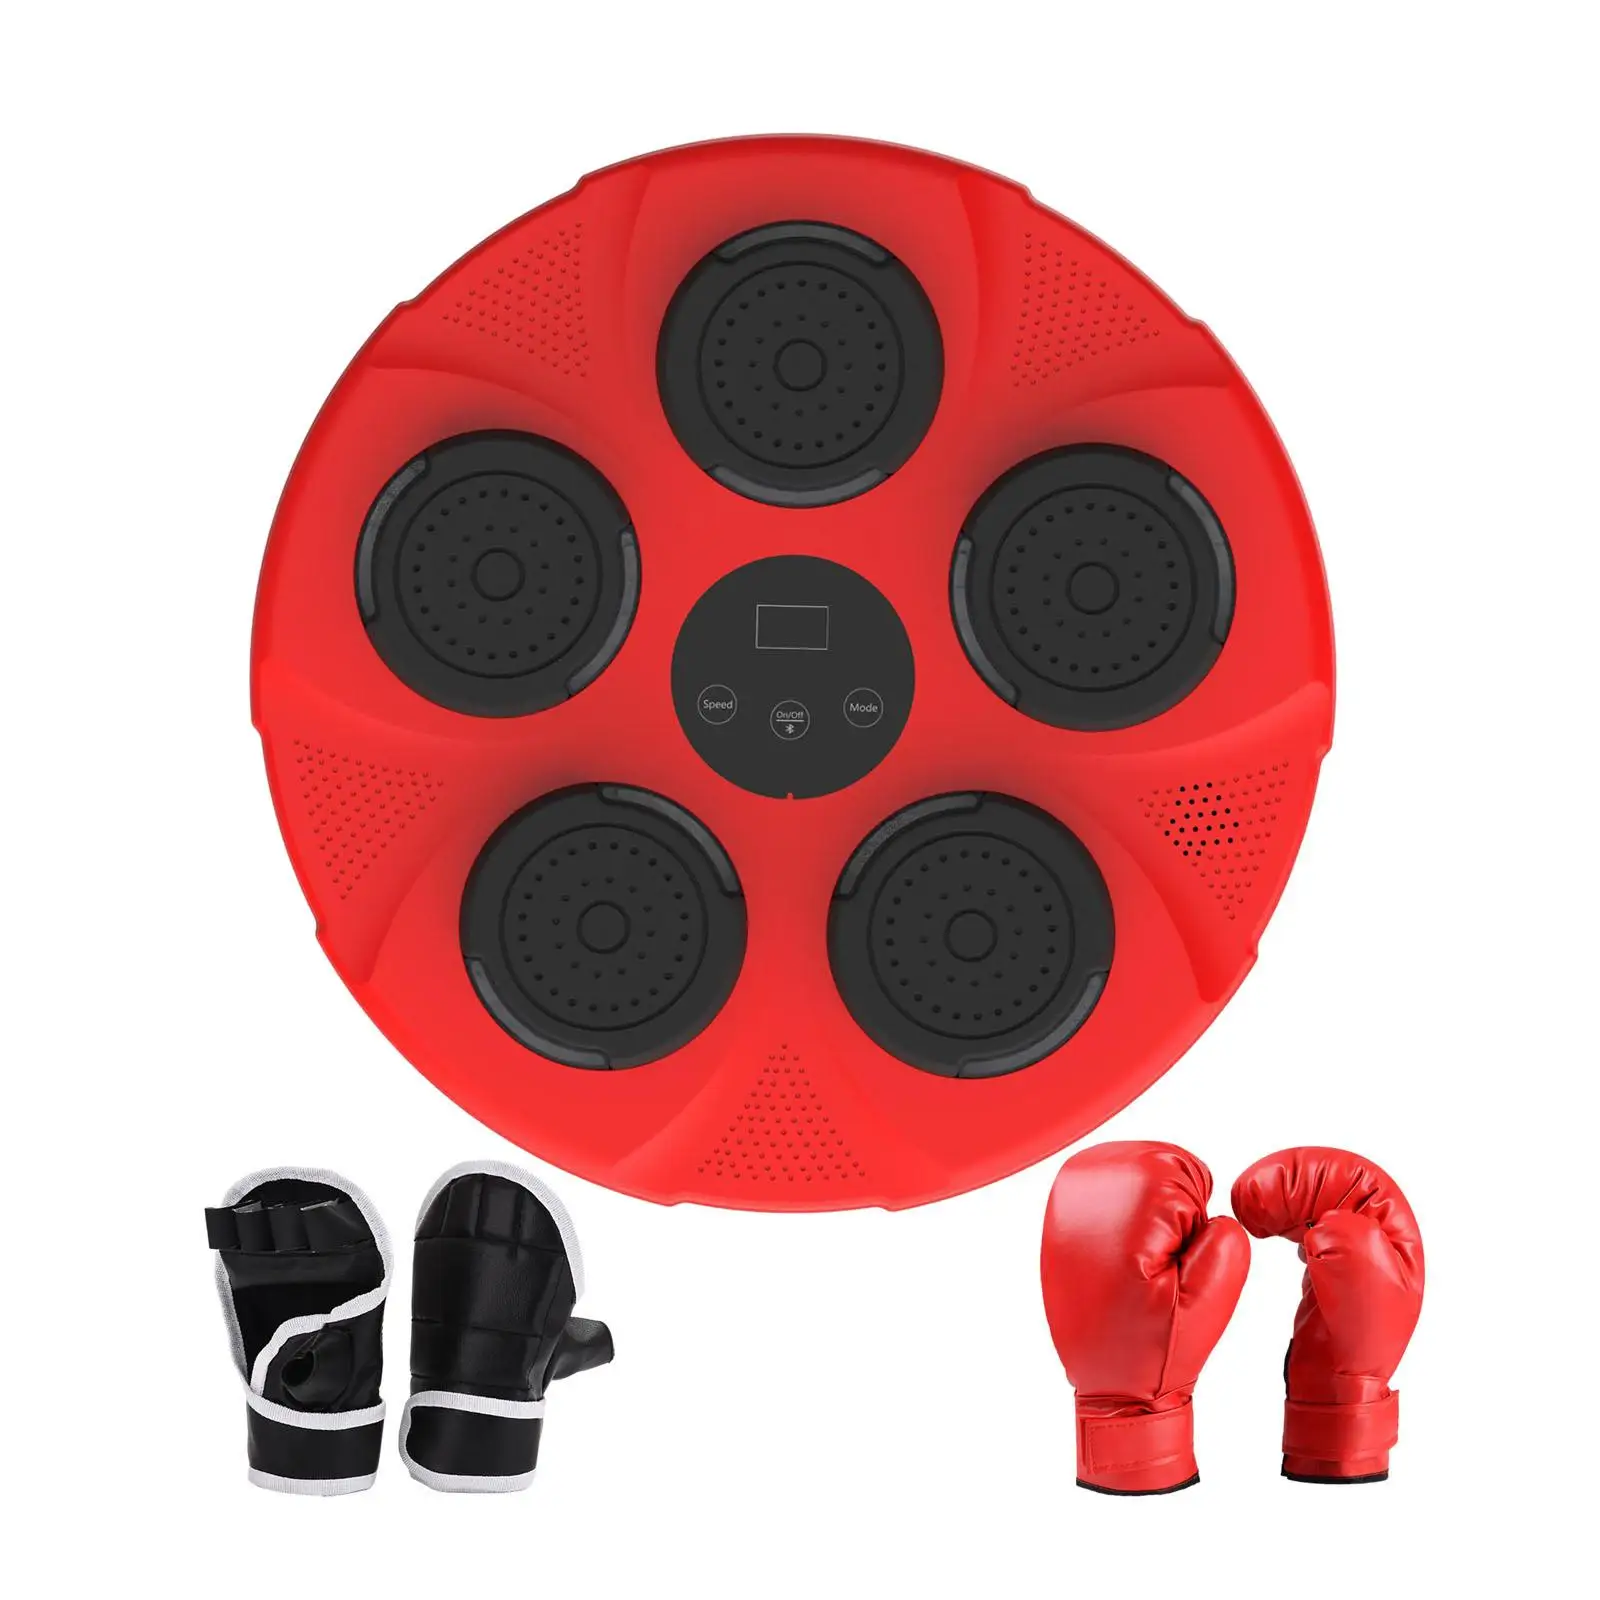 Music Boxing Machine Boxing Training Equipment for Response Training Focus